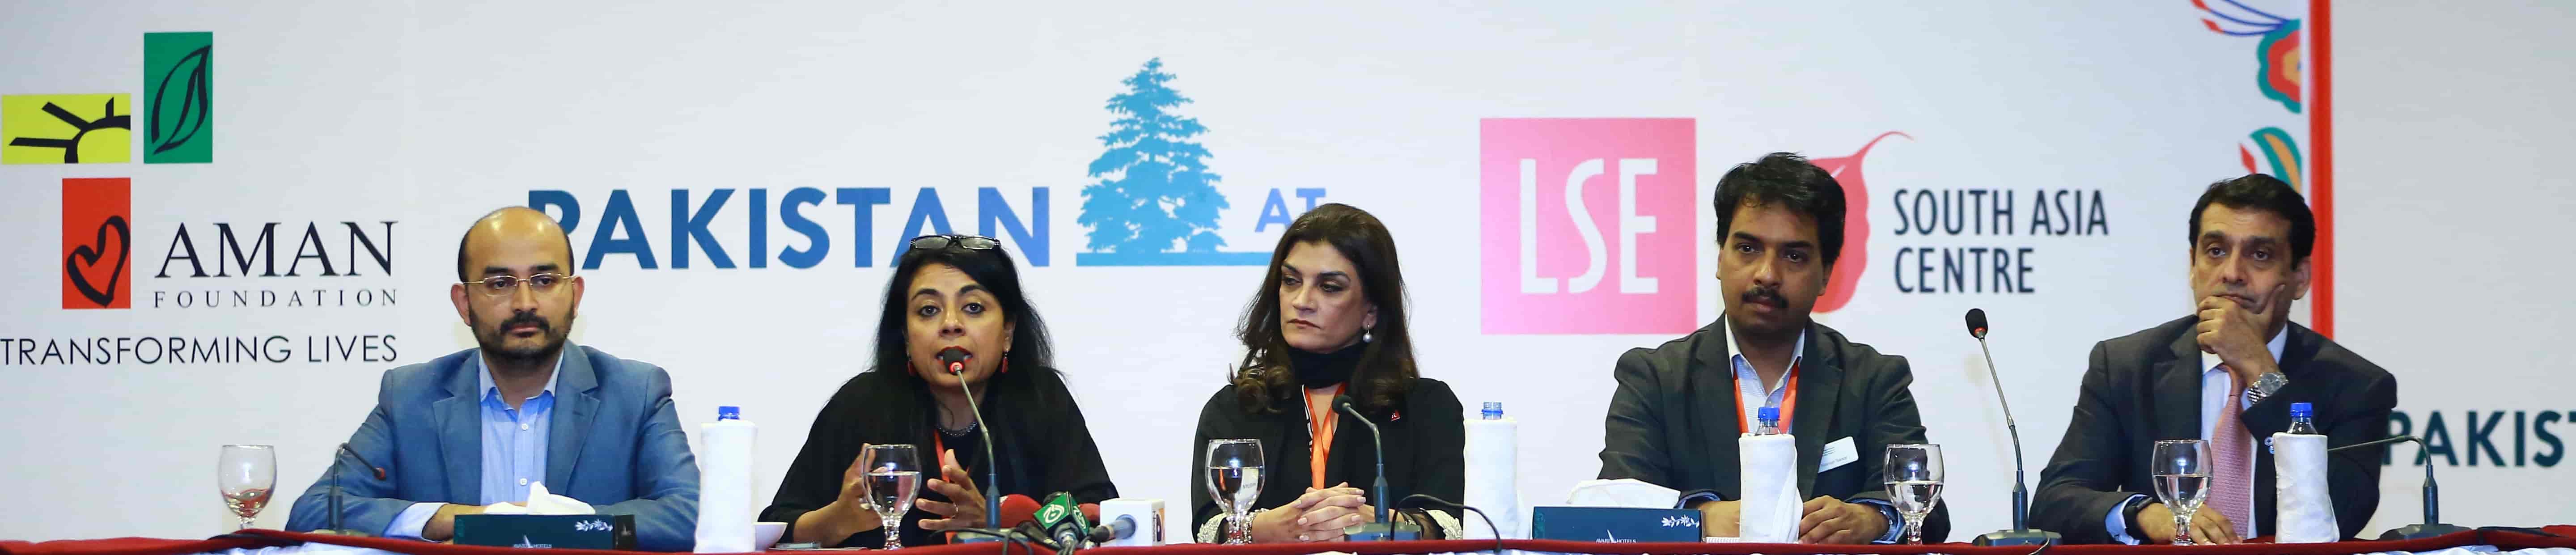 press conference at LSE Pakistan Summit